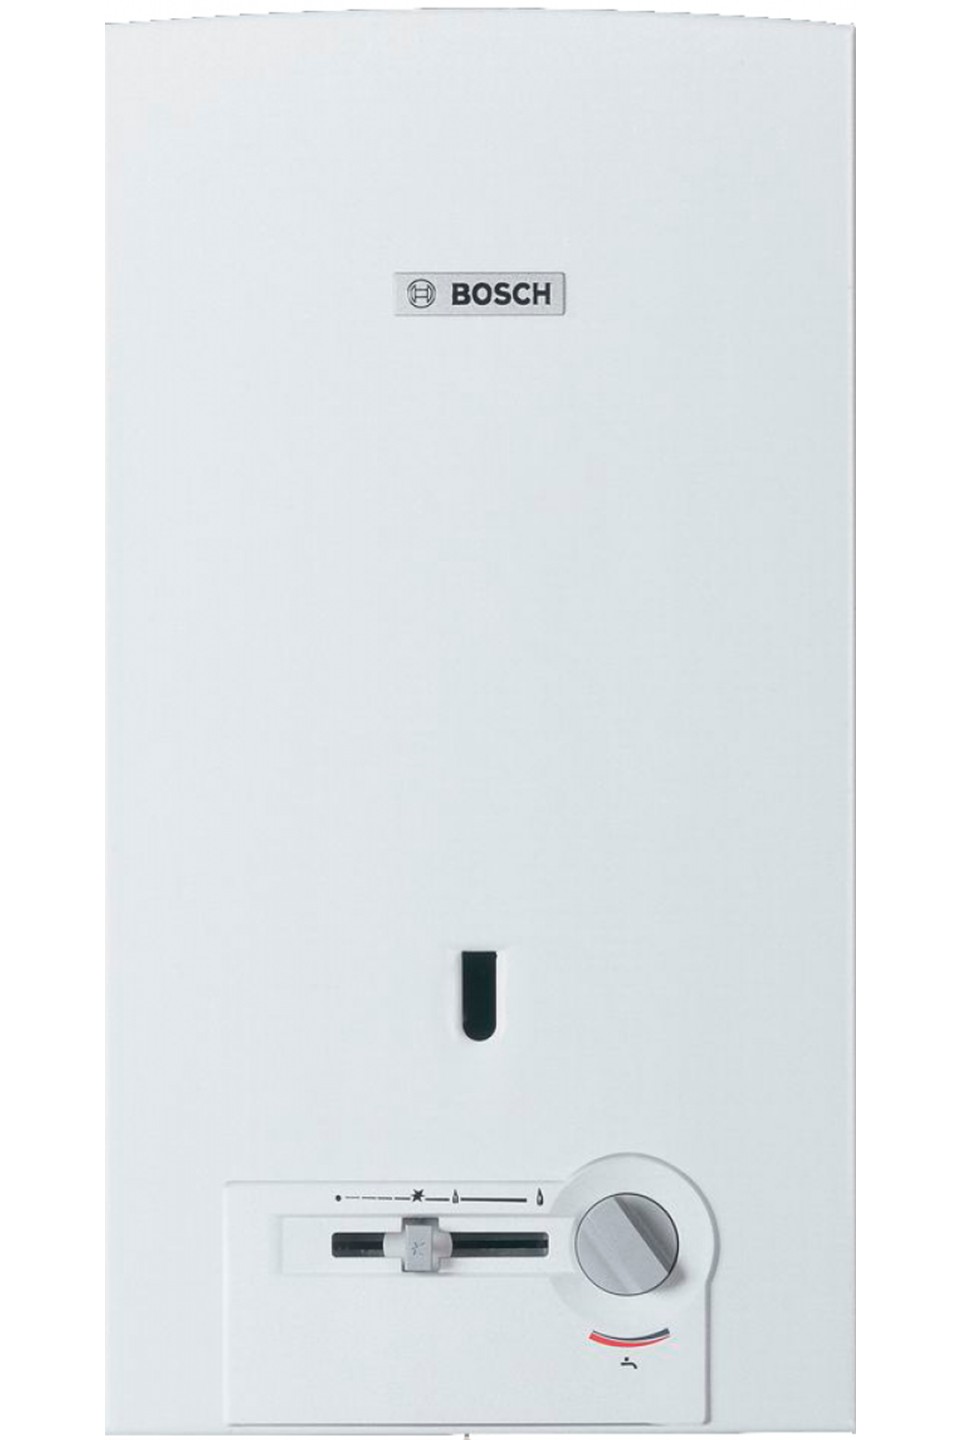 Інструкція колонка bosch газова Bosch Therm 4000 O WR 13-2 P (7702331716)